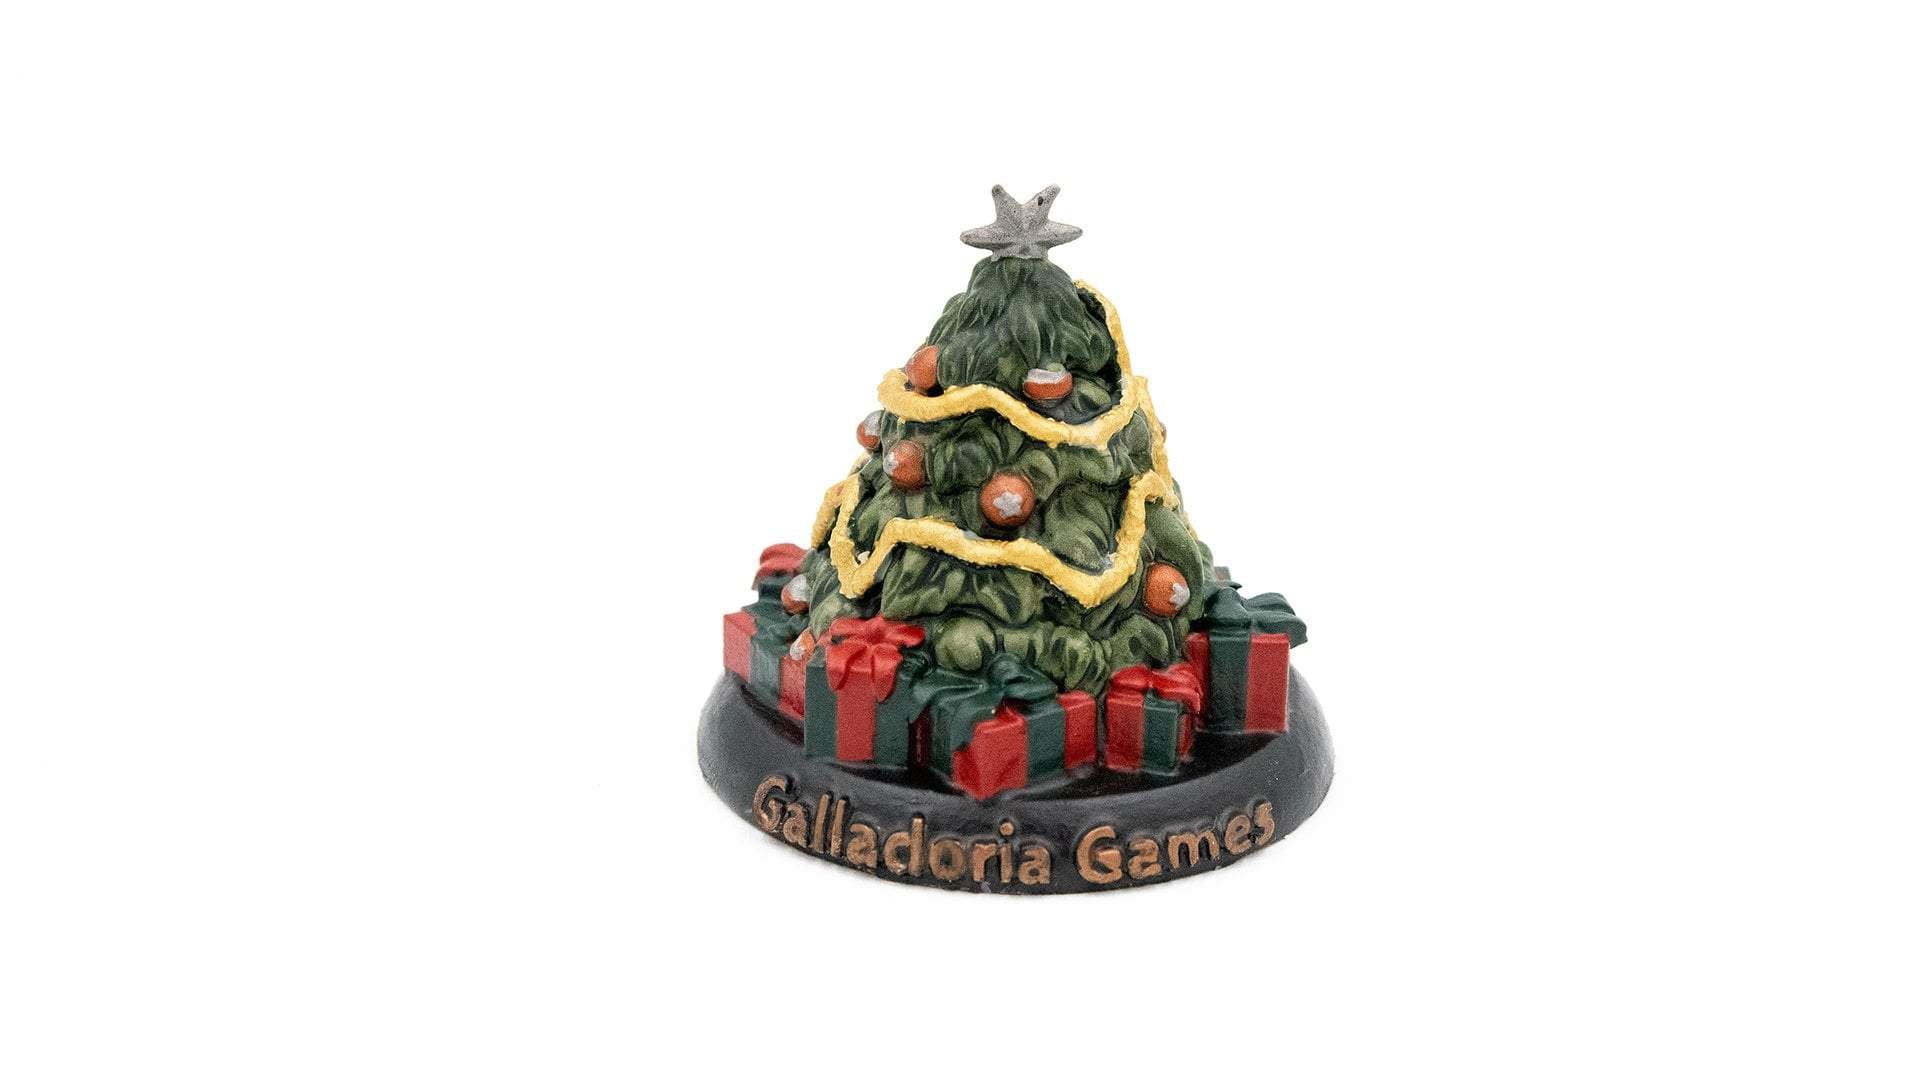 Galladoria Games 2019 Holiday Mimic Collectible